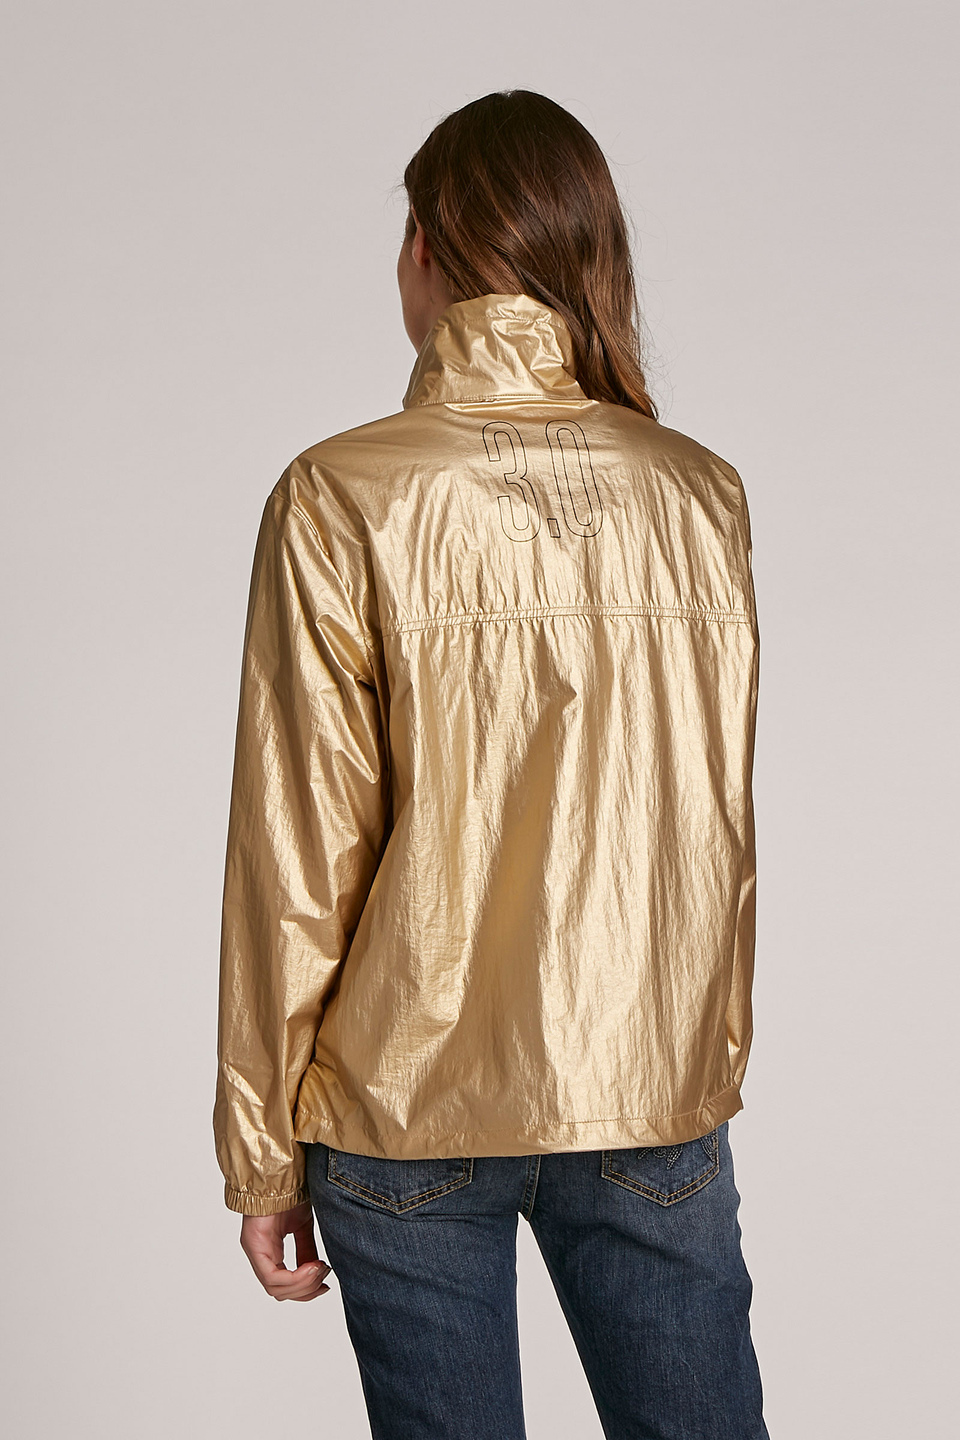 Women's long-sleeved regular-fit nylon jacket - La Martina - Official Online Shop